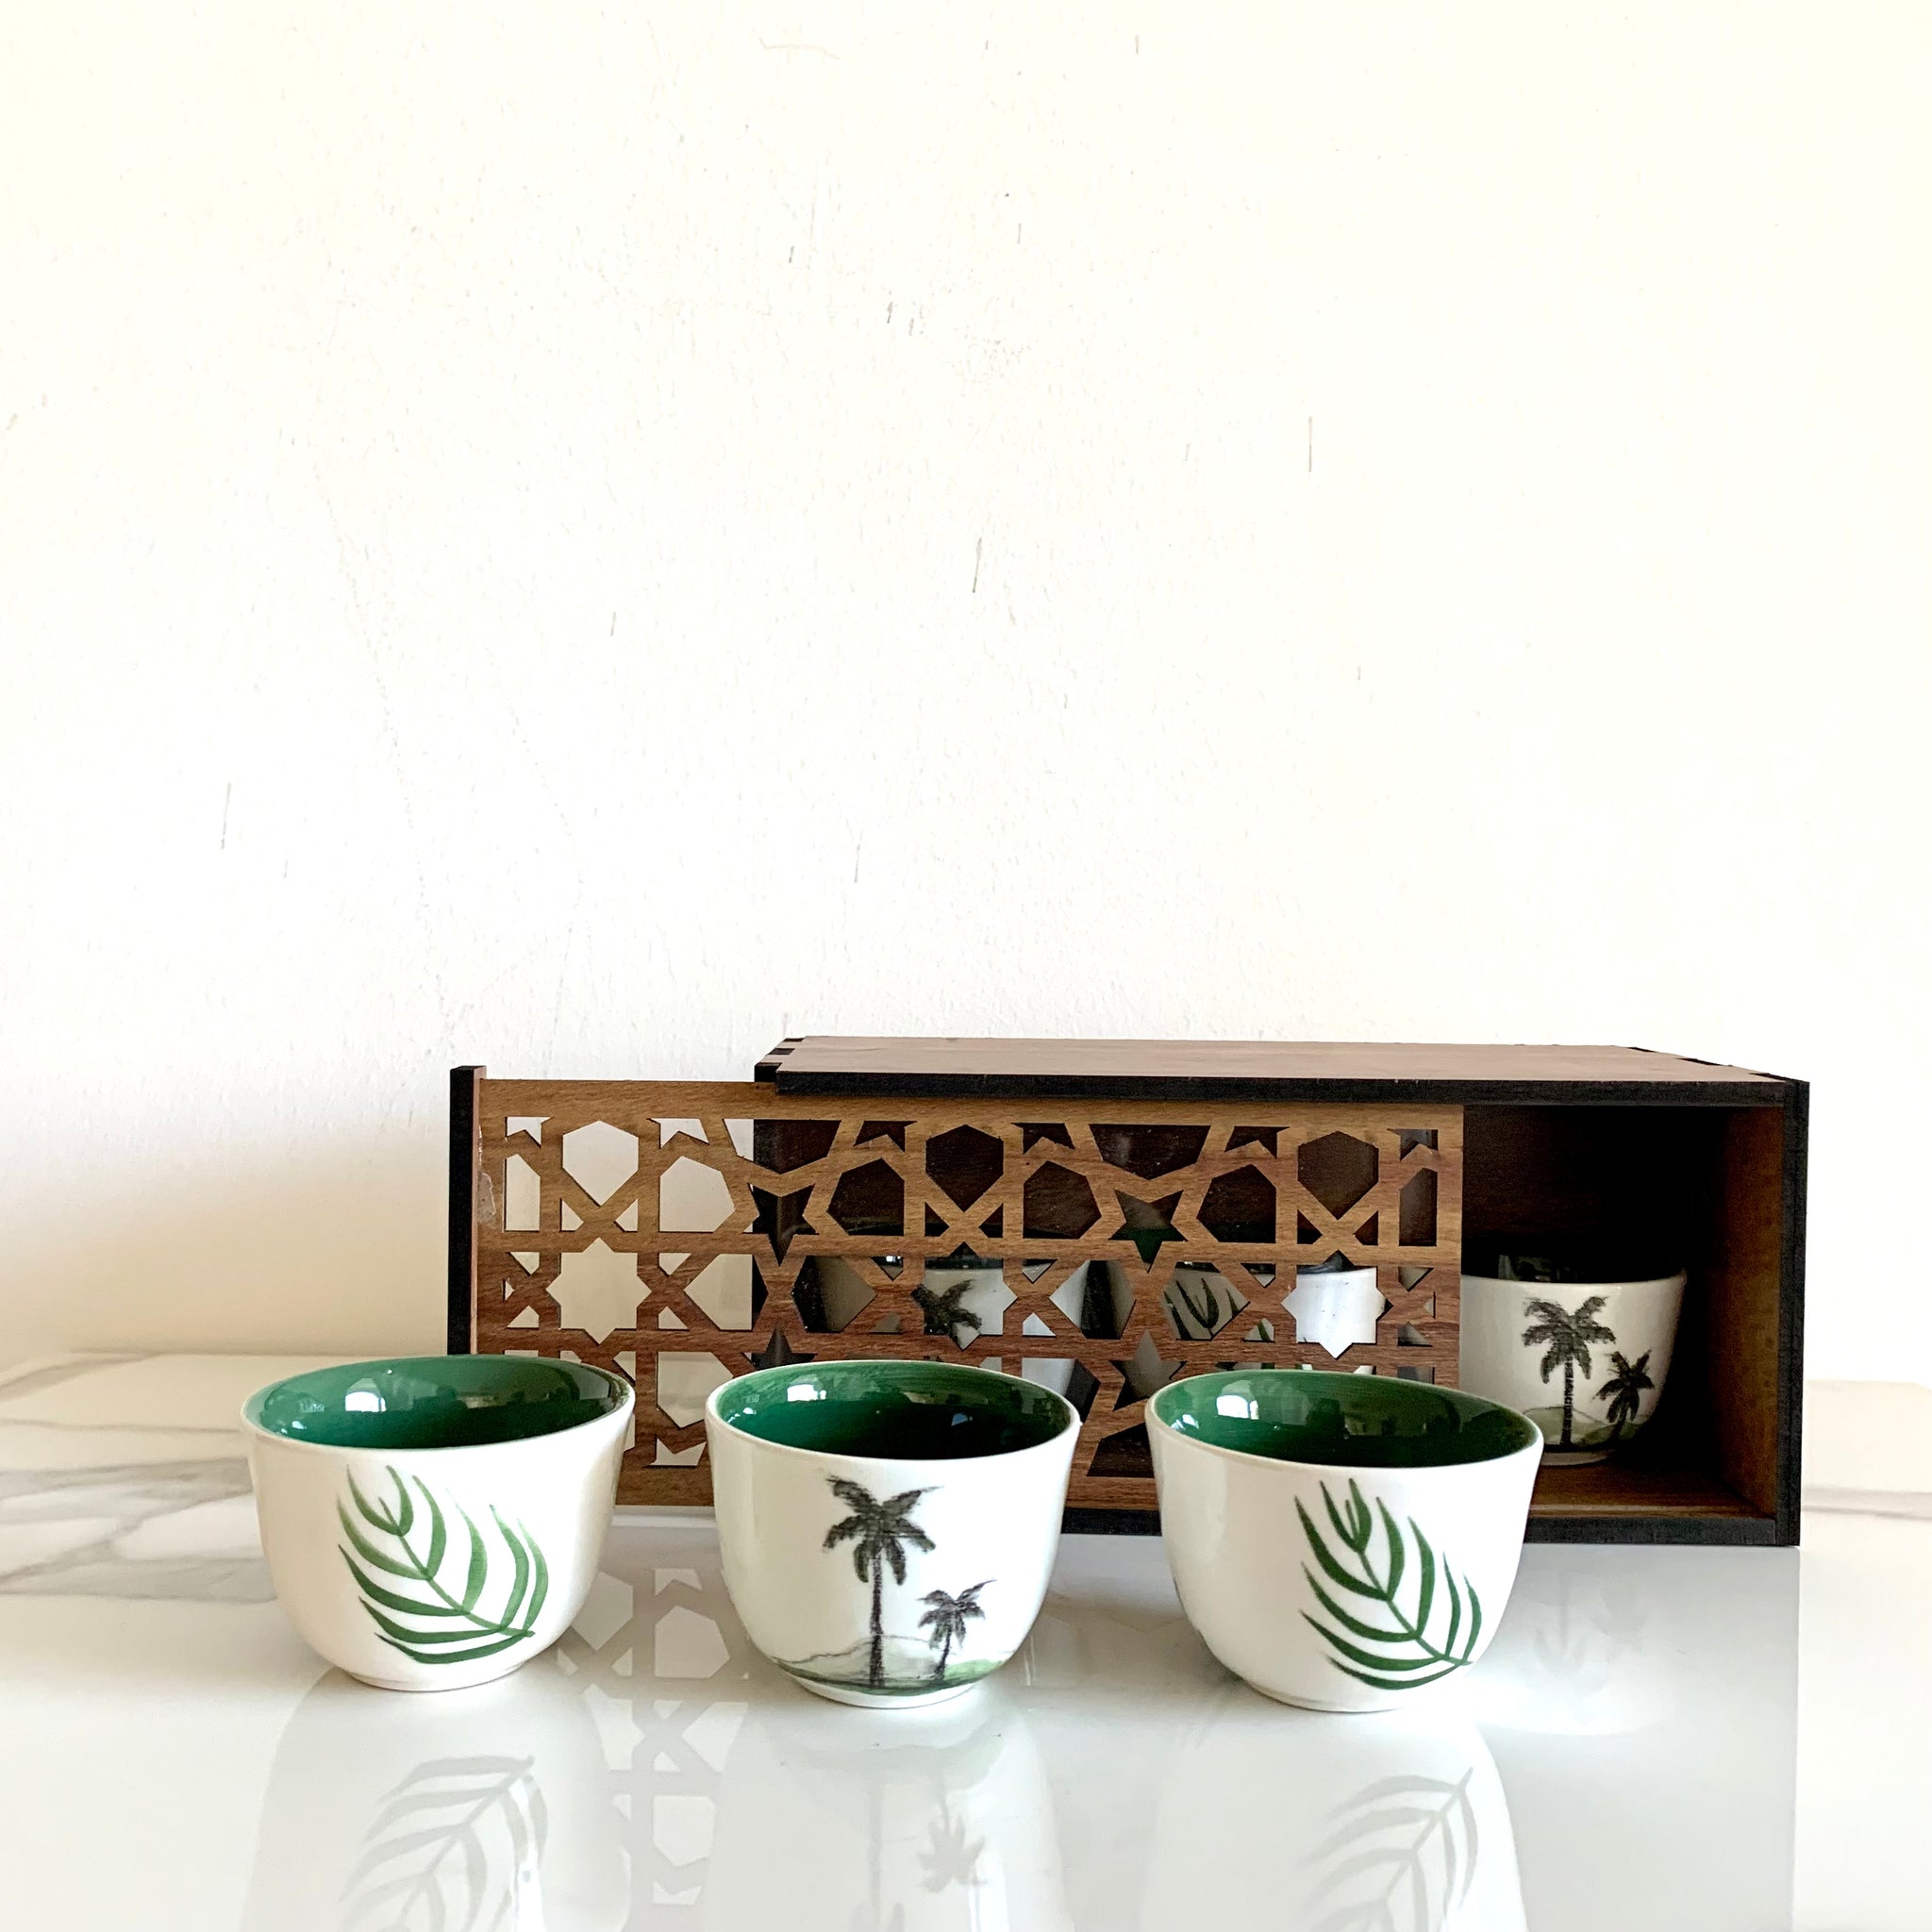 Sa’af Arabian Coffee Cups (Set of 6)